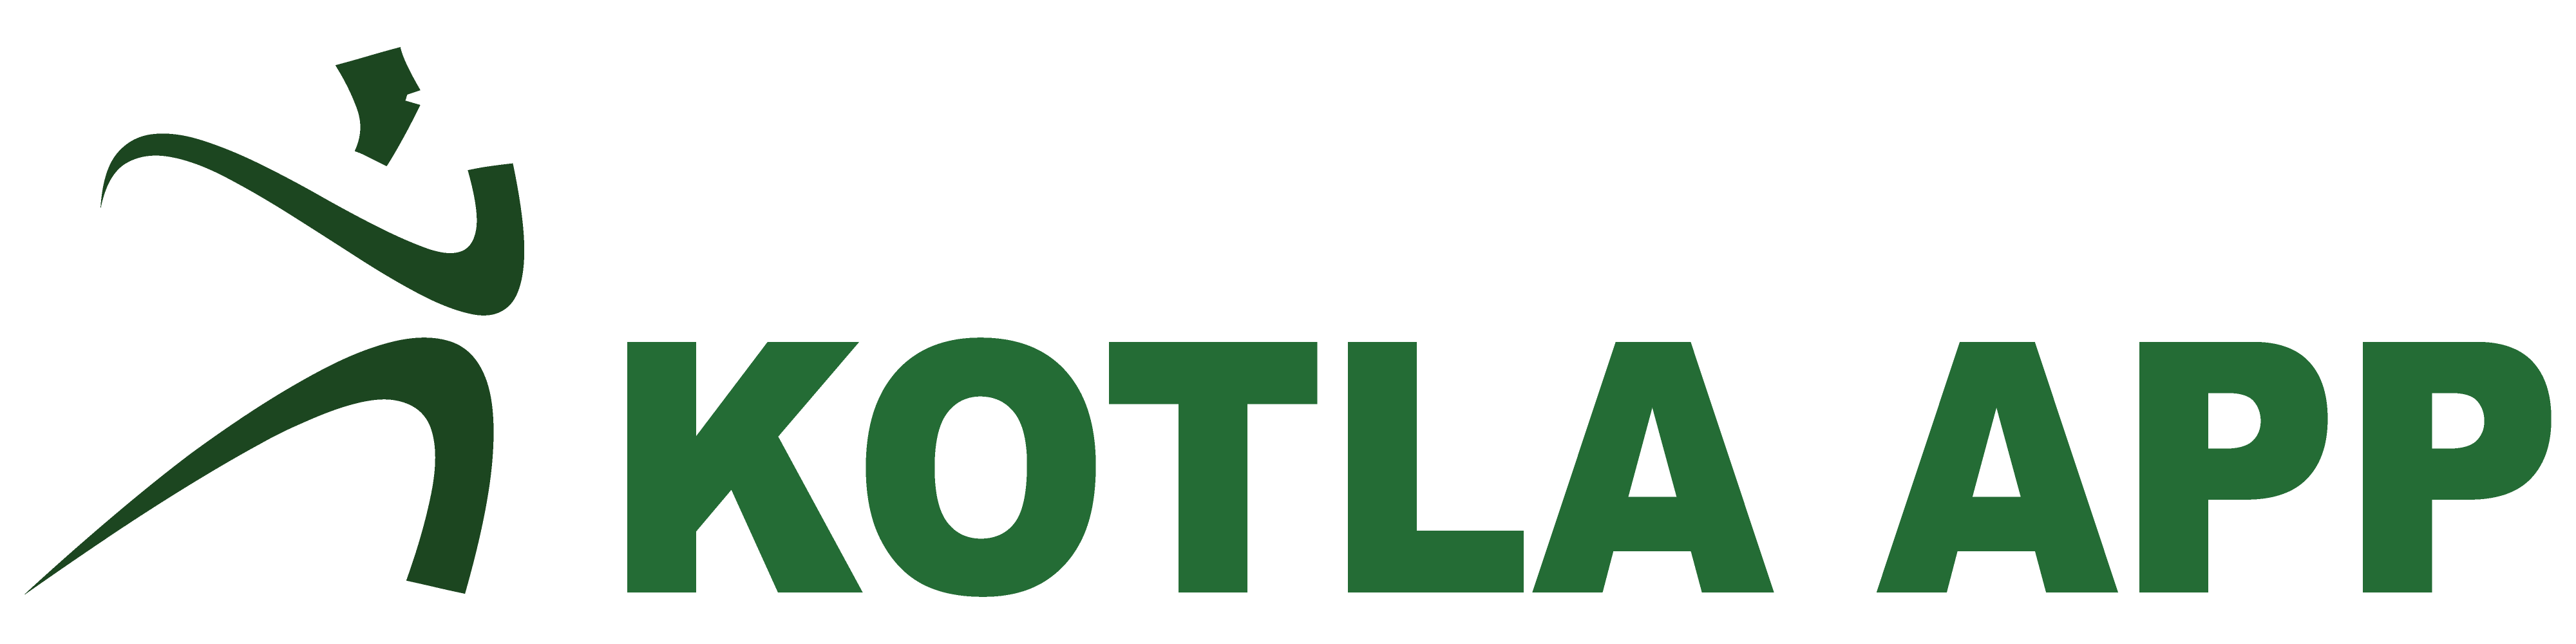 Kotla-App-Logo.png